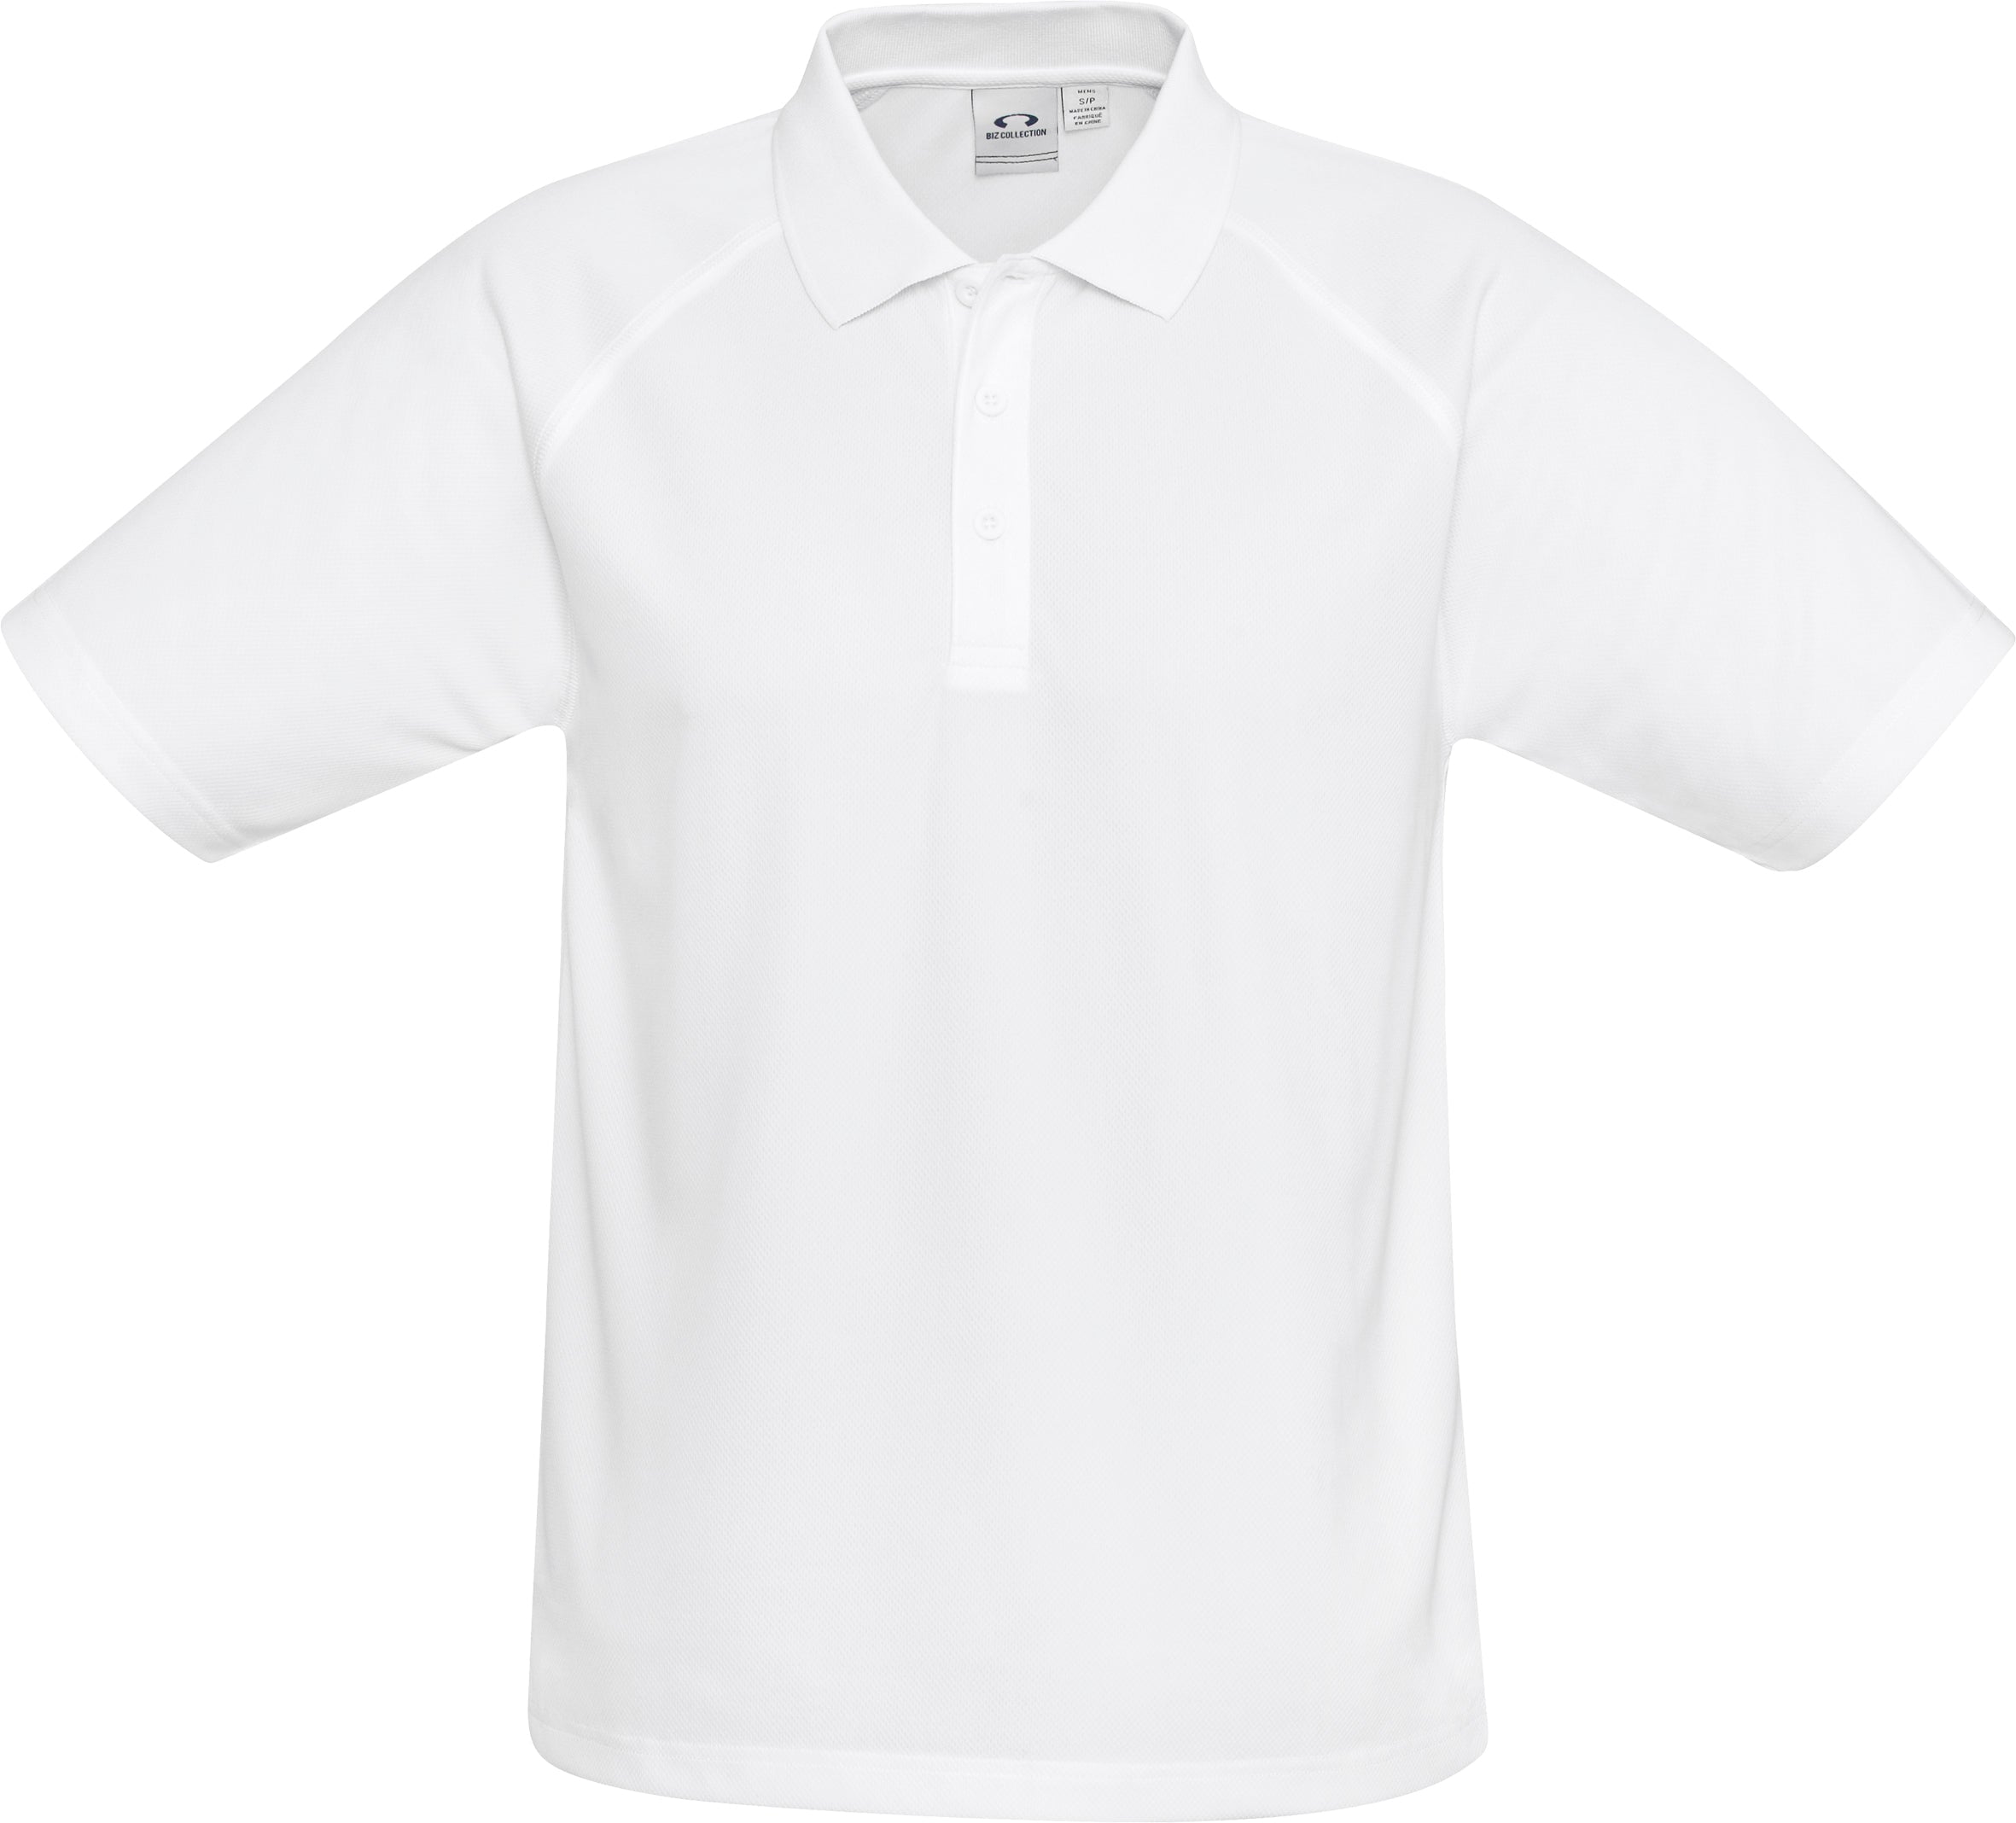 Mens Sprint Golf Shirt - White Only-L-White-W